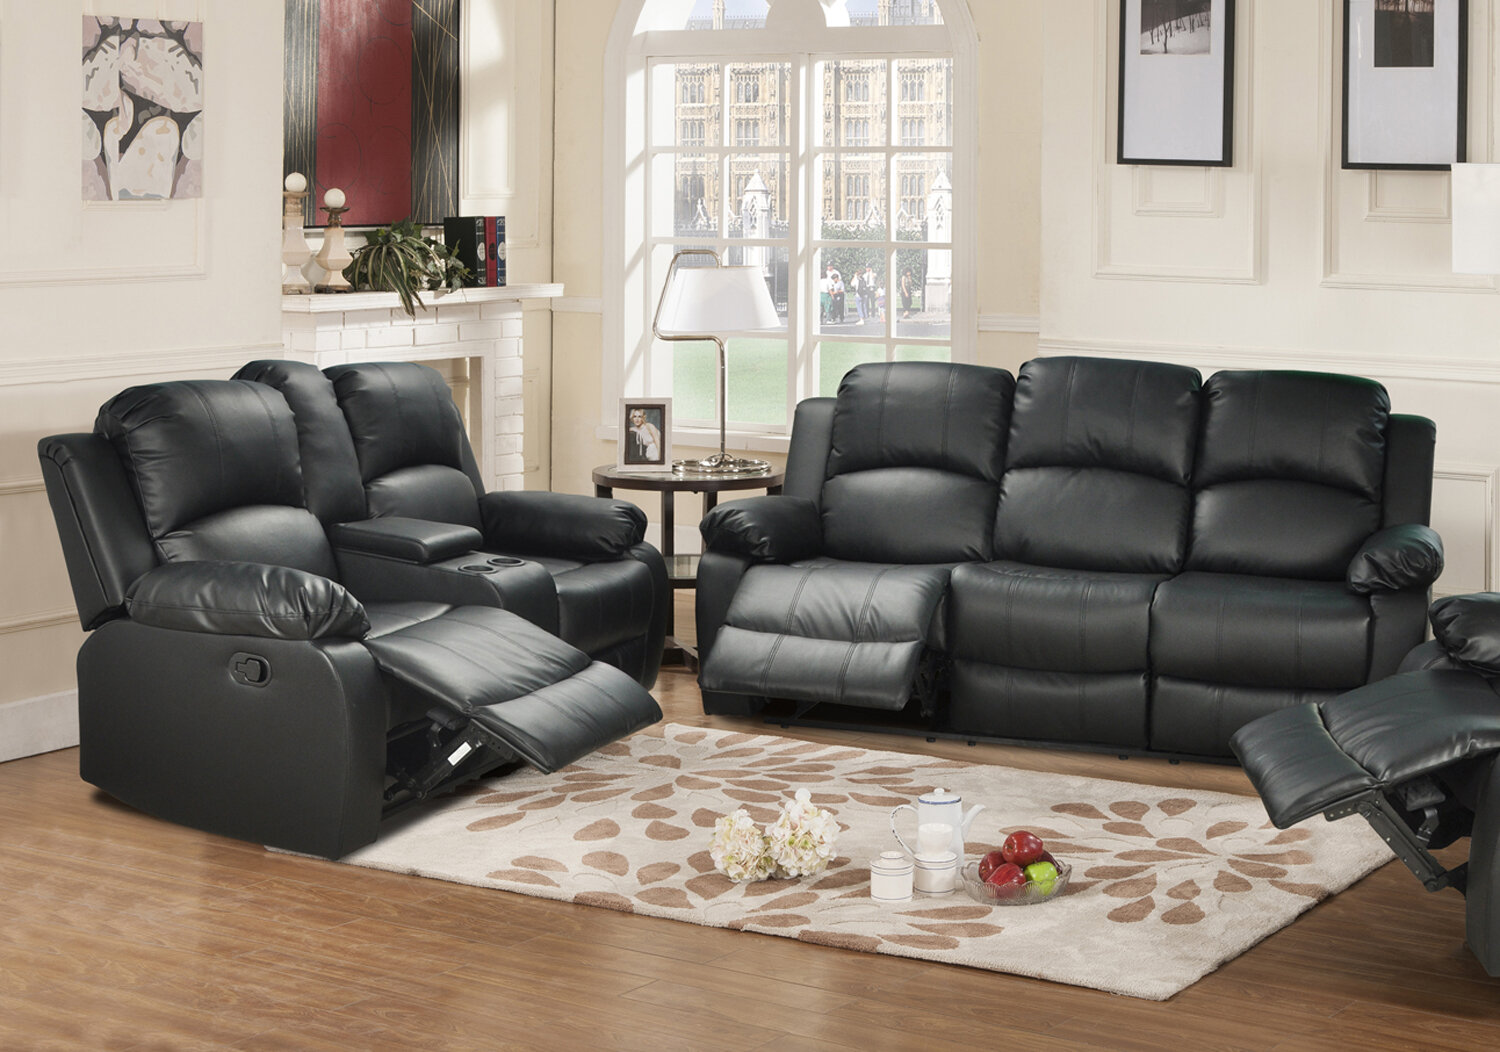 Red Barrel Studio Azariah Reclining 2 Piece Faux Leather Living Room Set Reviews Wayfair